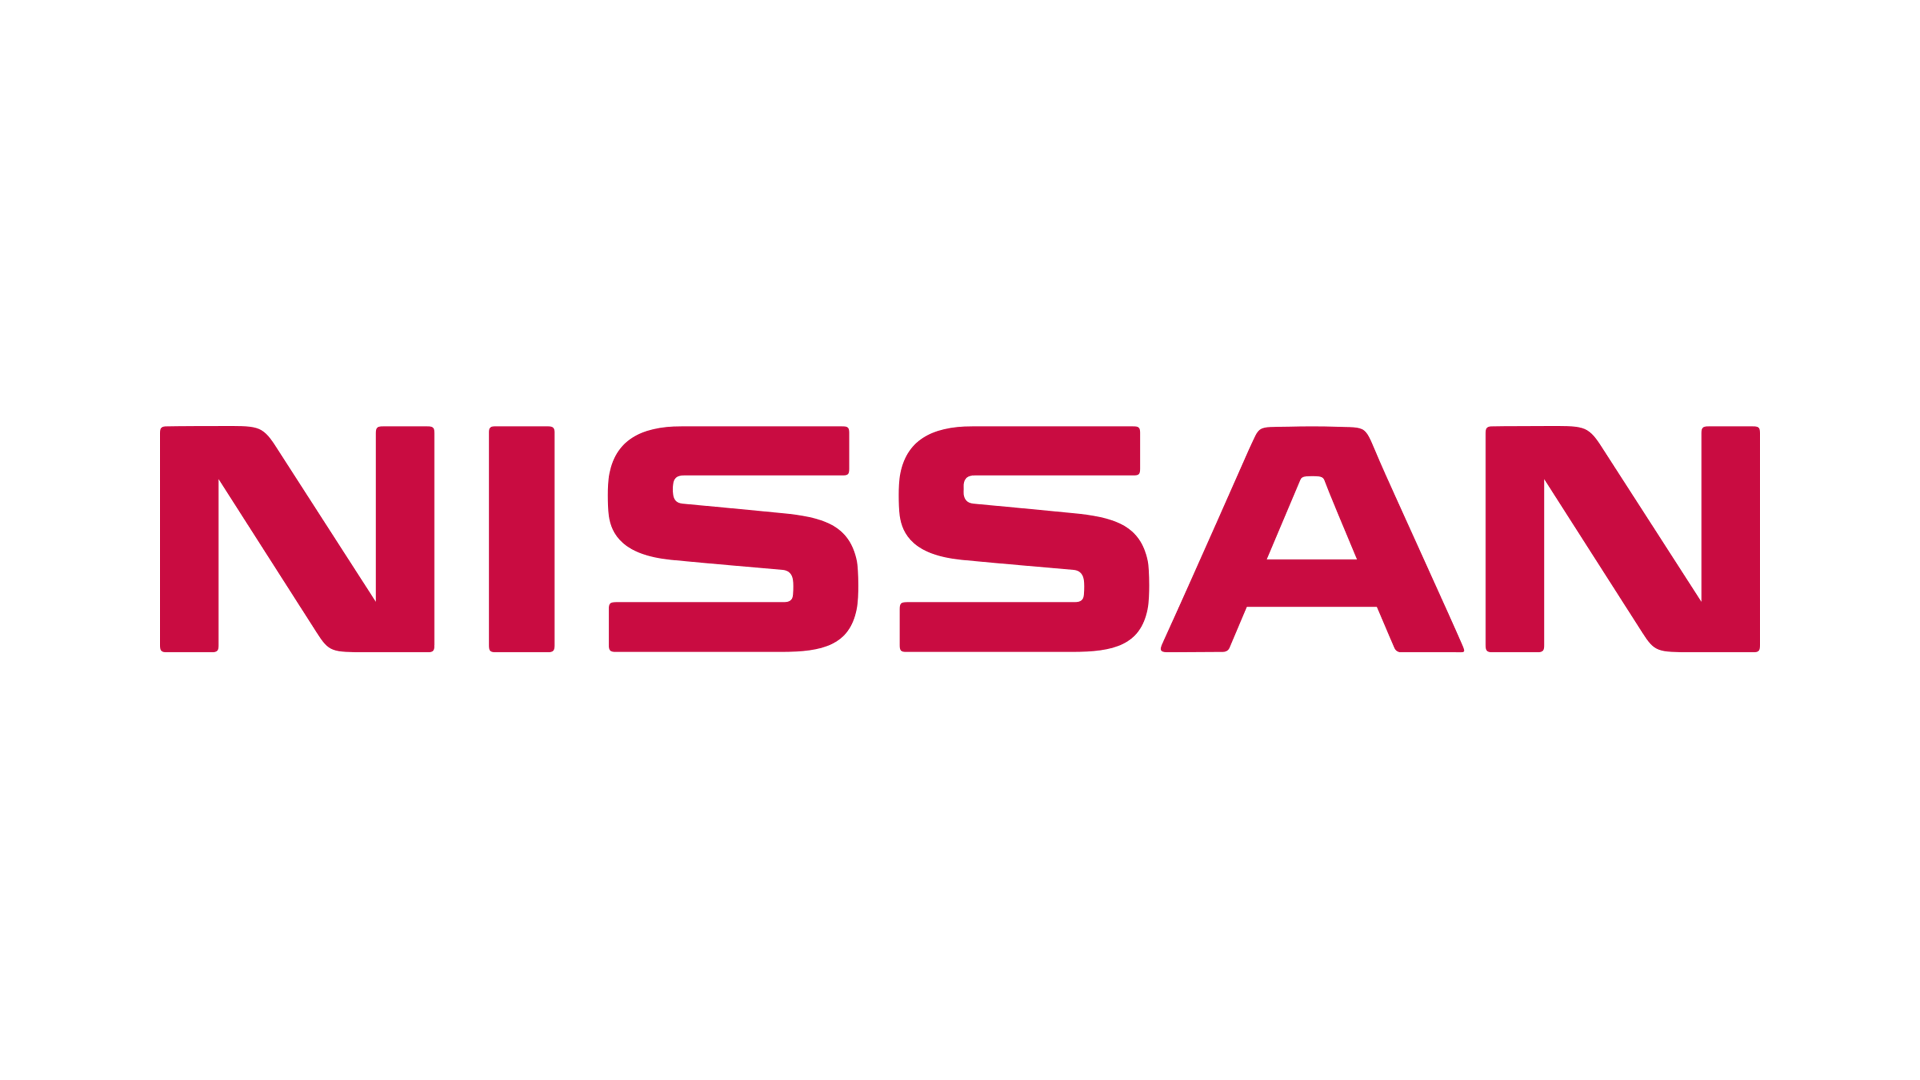 Nissan logo (2013u2013Present